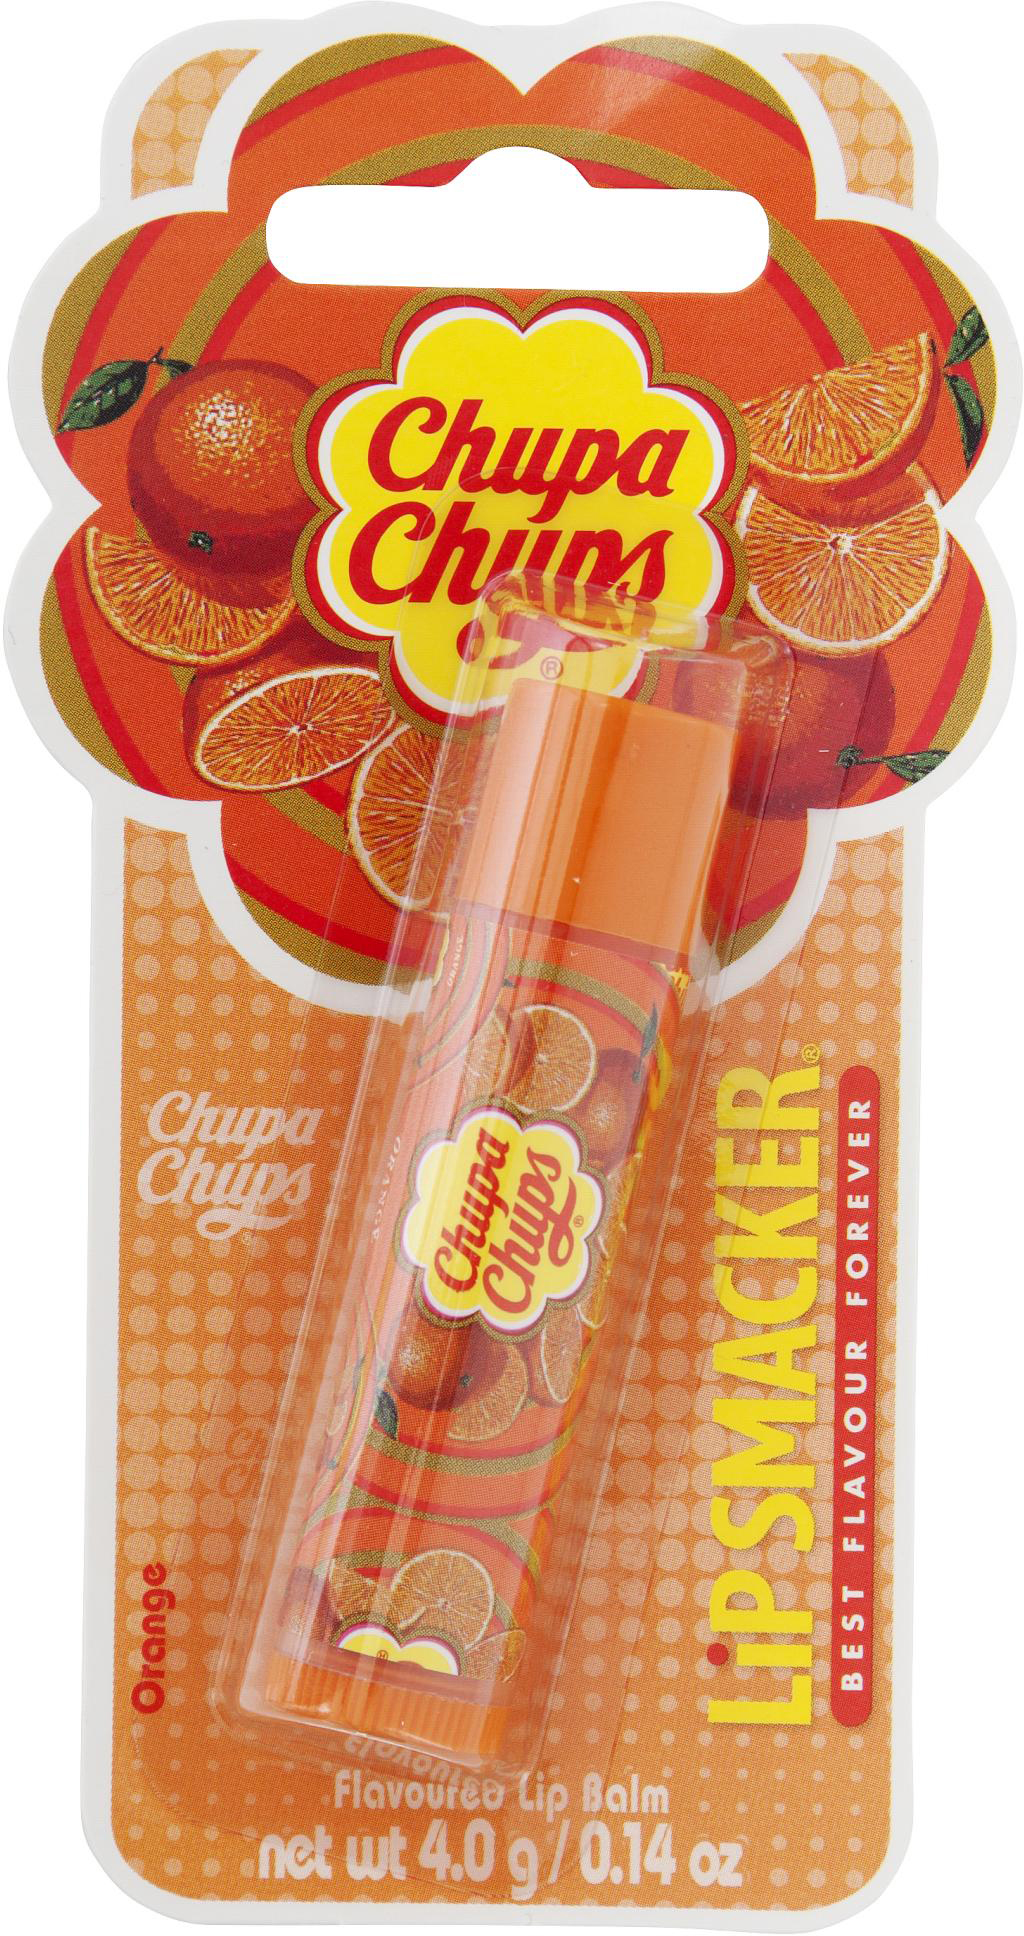 Lip Smacker Chupa Chups Lip Balm Orange